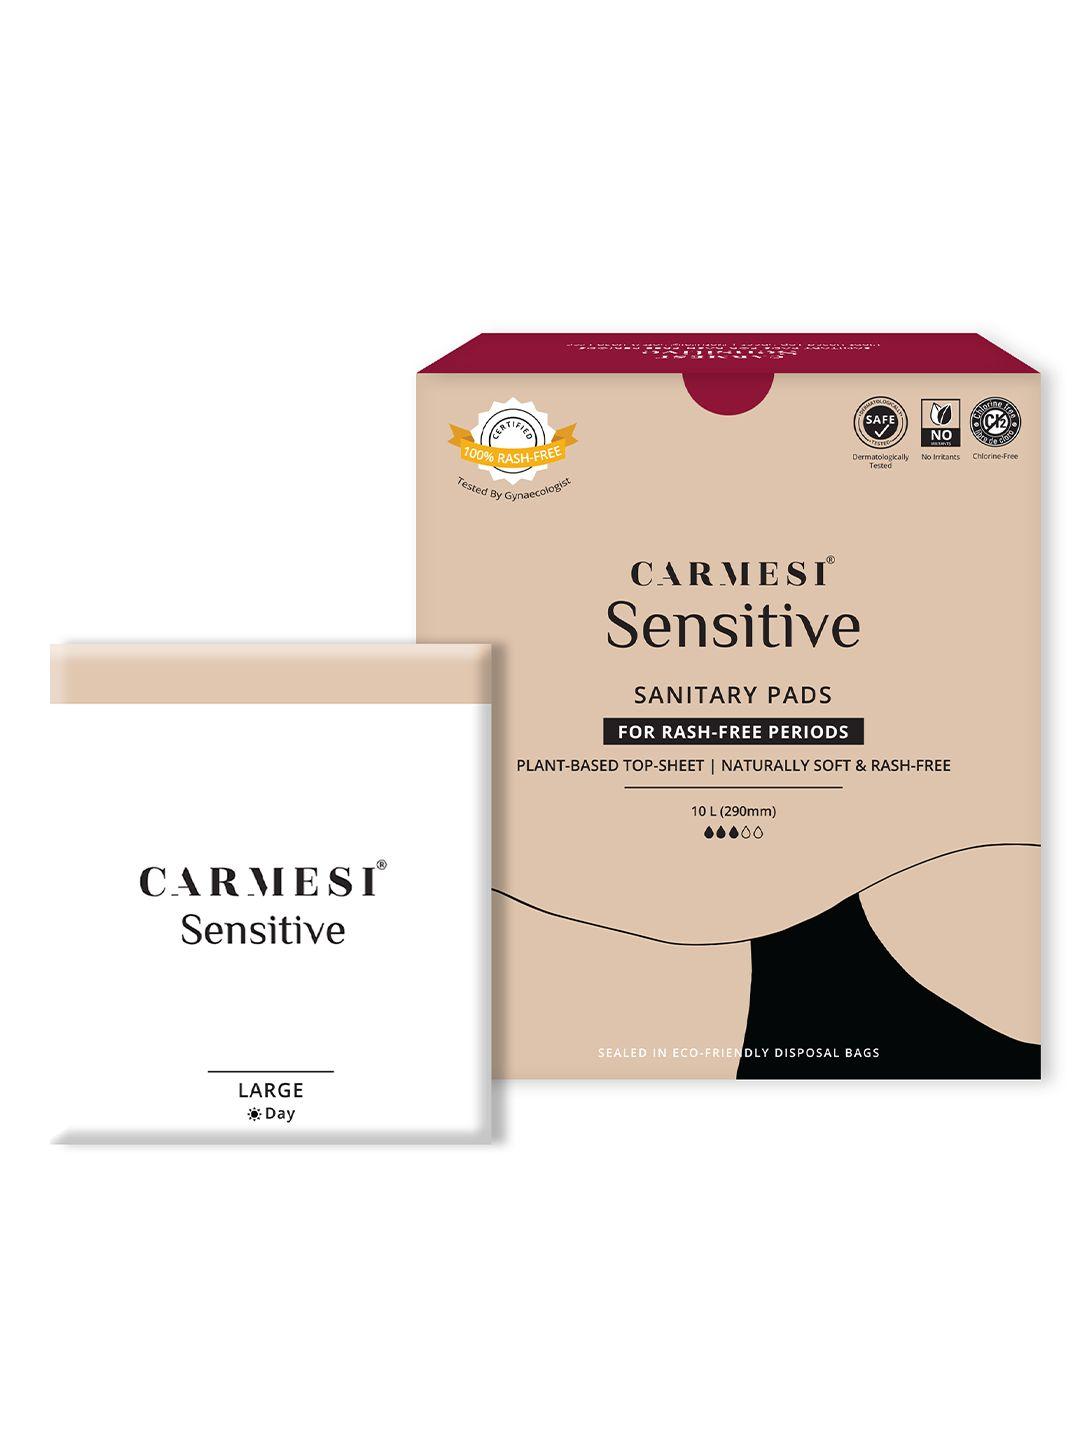 carmesi sensitive - 10 pads - 10 large